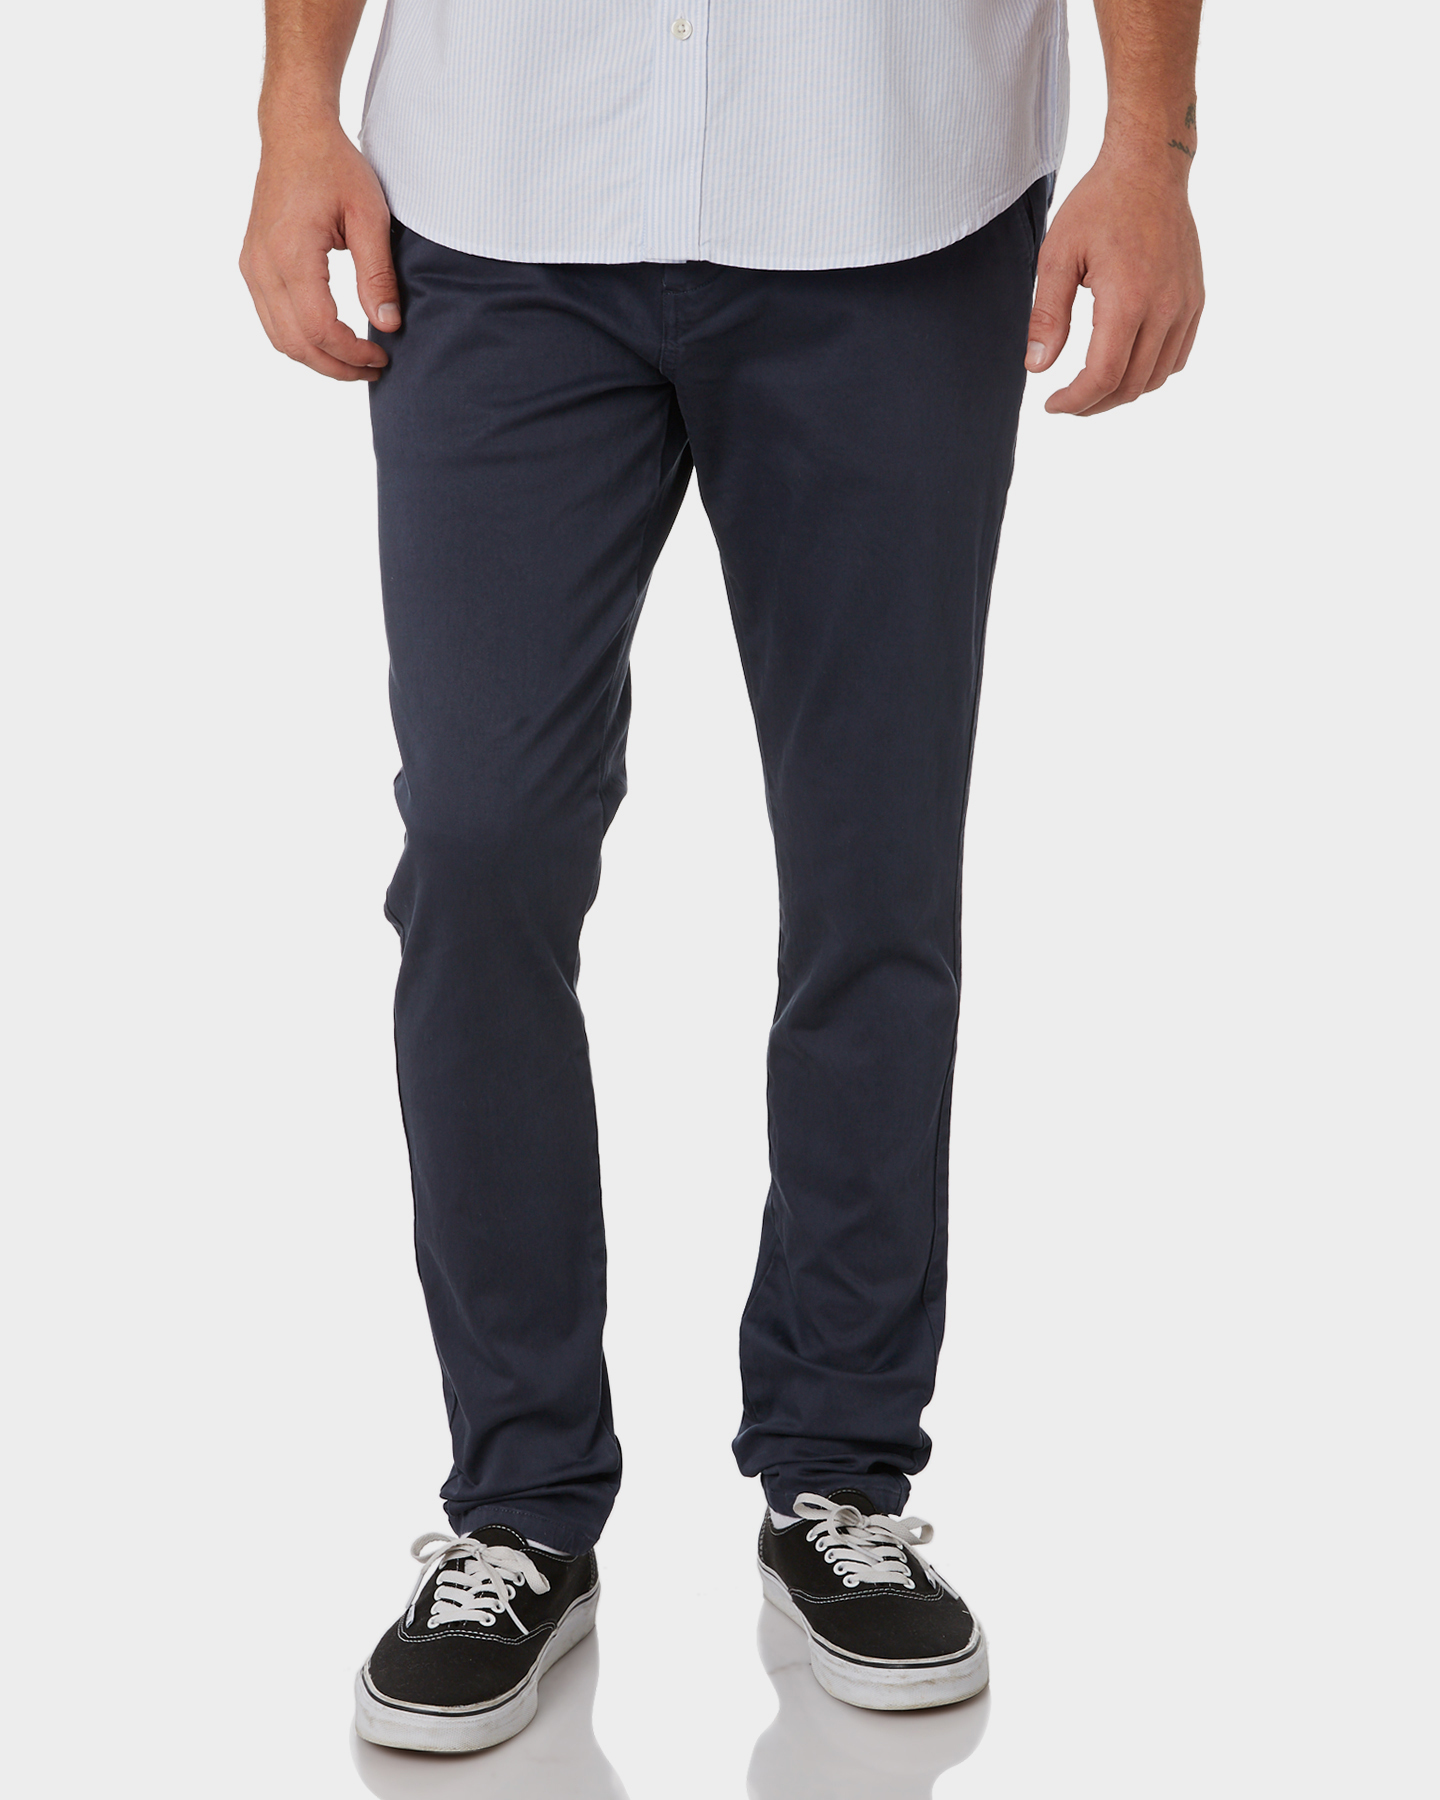 Primark Chino trouser discount 84% slim MEN FASHION Trousers Skinny Navy Blue 